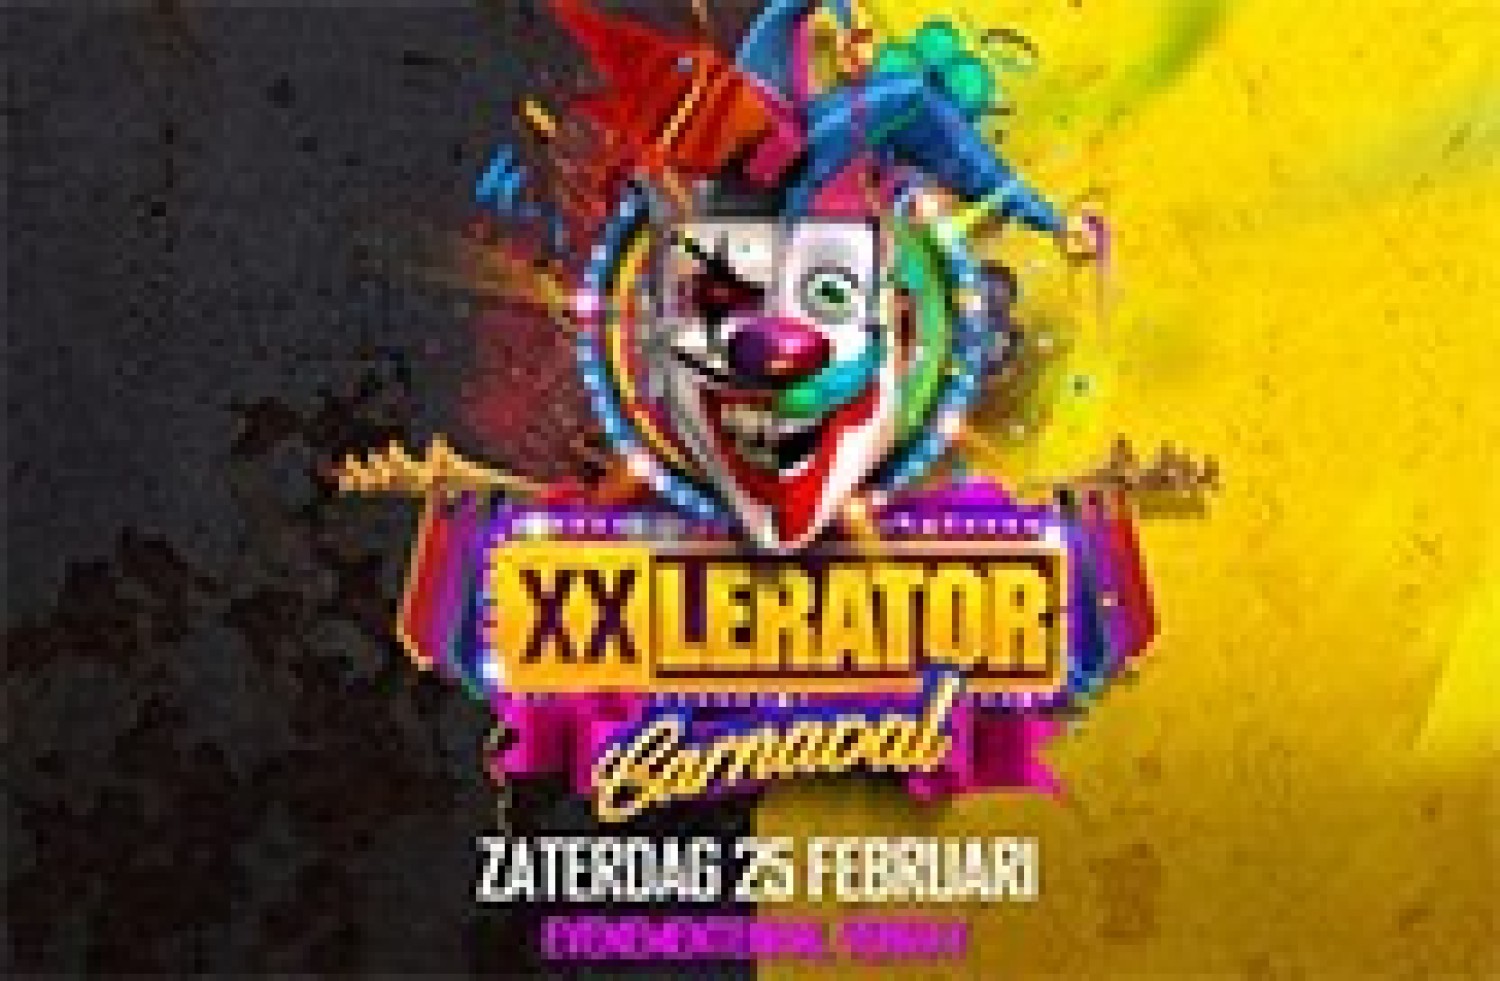 Party report: XXlerator Carnaval 2017, Venray (25-02-2017)